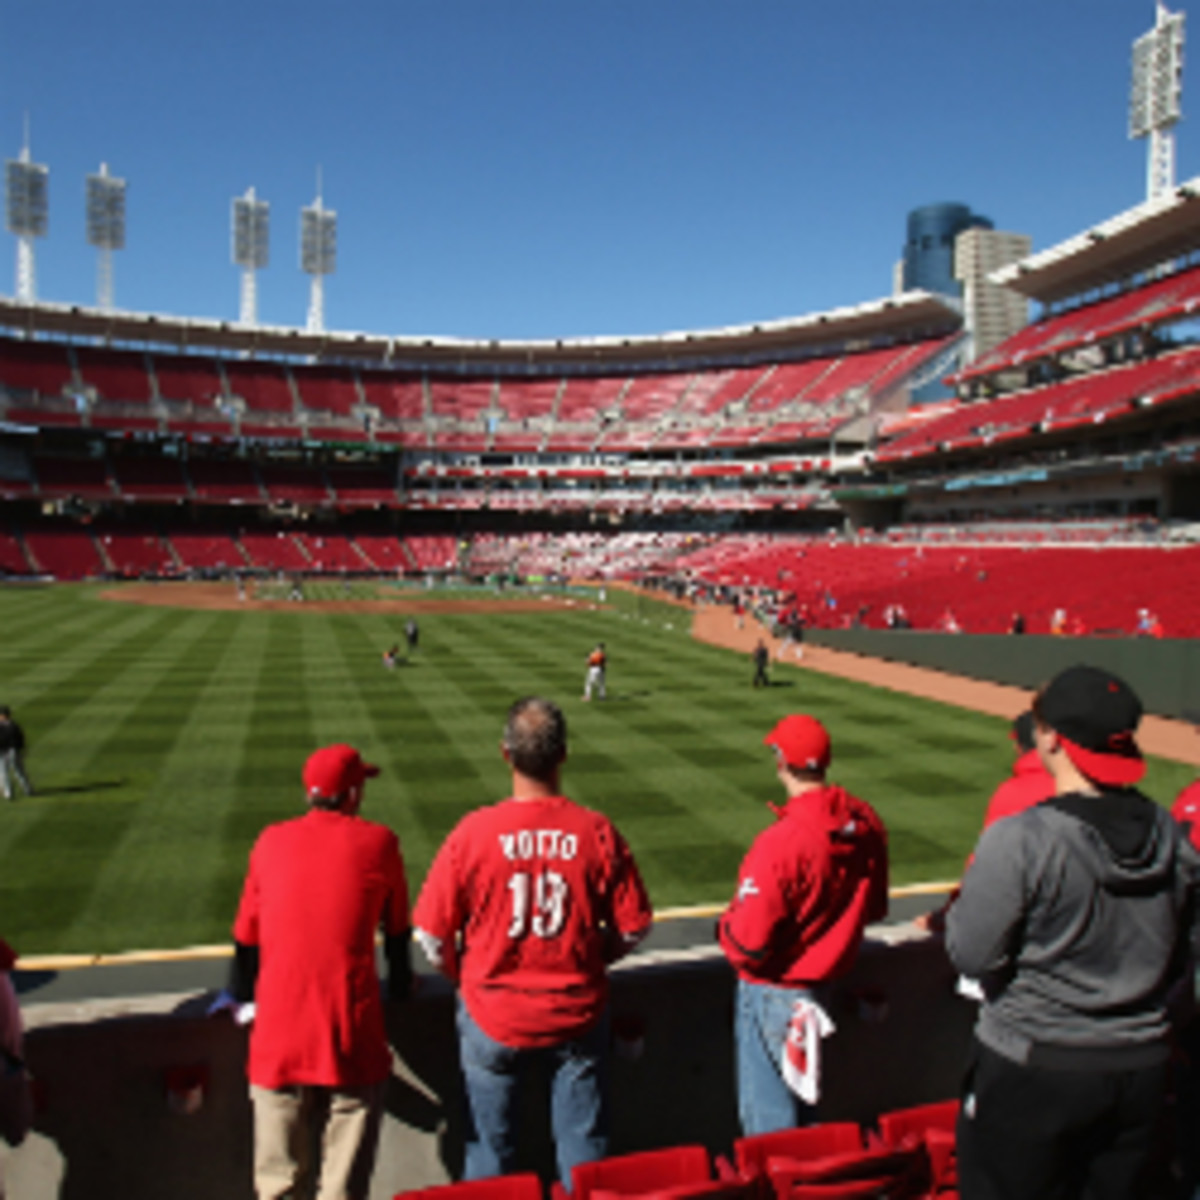 Cincinnati's Great American Ballpark will host the 2015 MLB All-Star Game. (Jonathan Daniel/Getty Images)